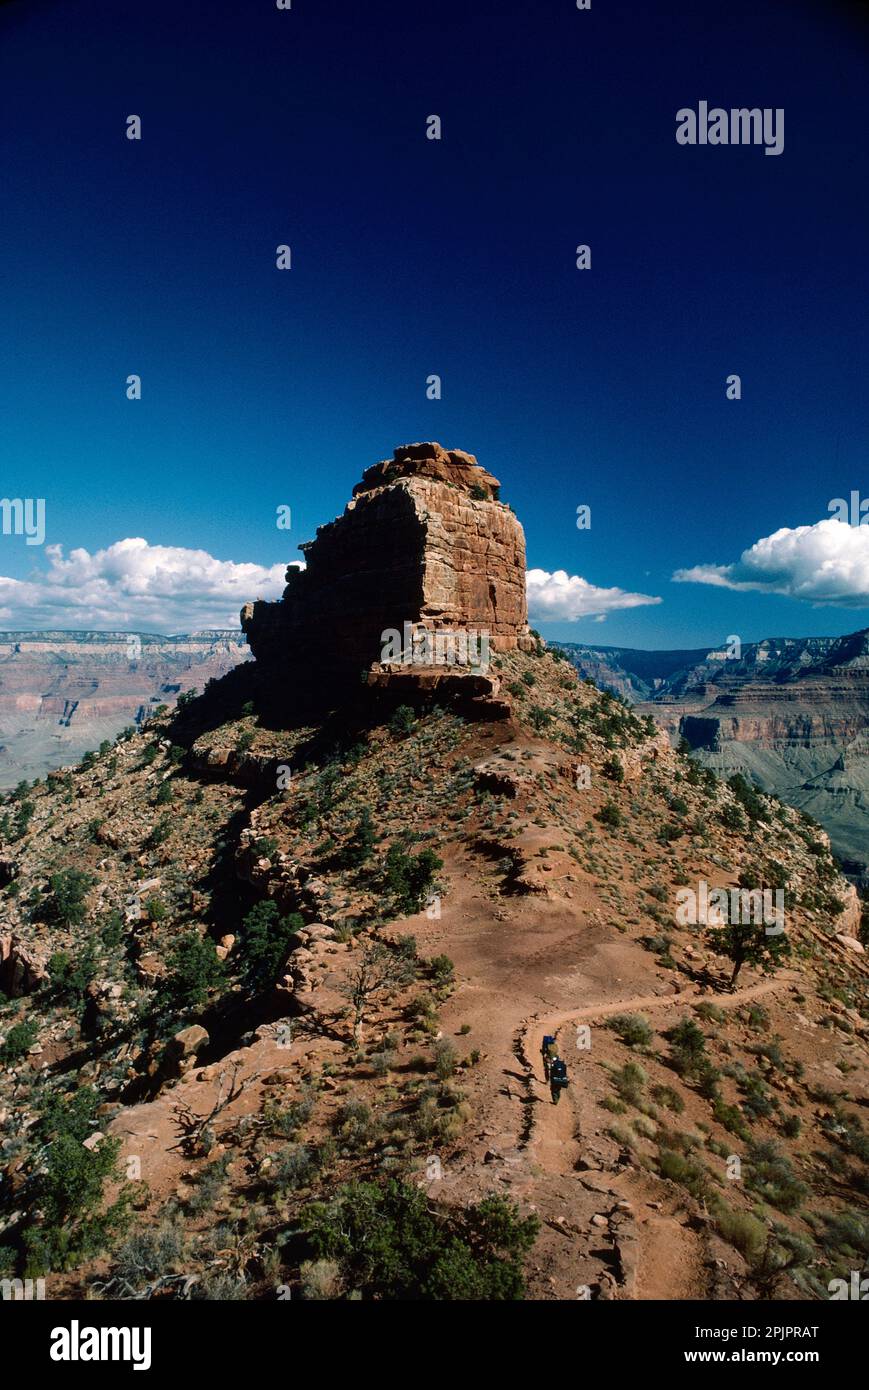 Grand Canyon of the Colorado, Arizona, View of the Pinnacle from Cedar Ridge Stock Photo